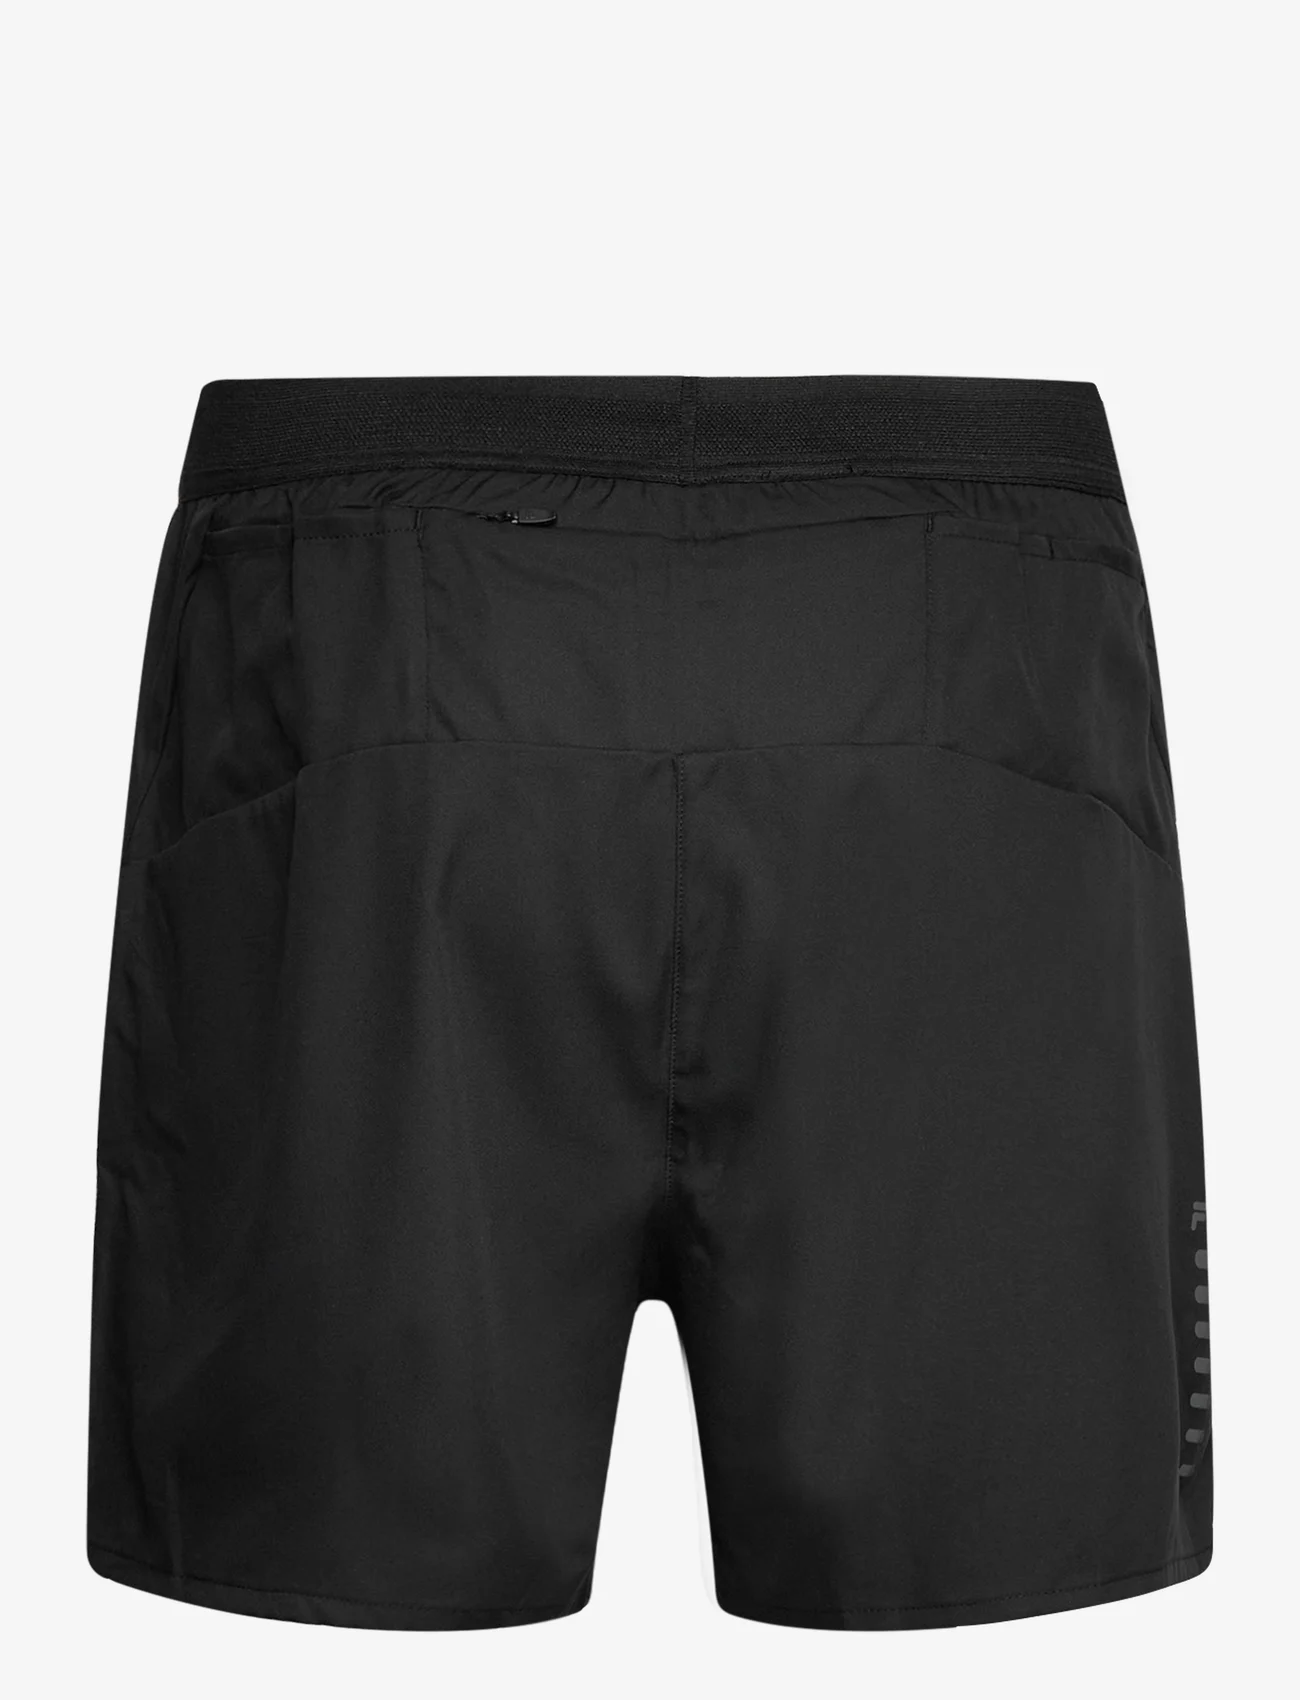 FILA - RIAZA runnig shorts with inner tights - urheilushortsit - black - 1